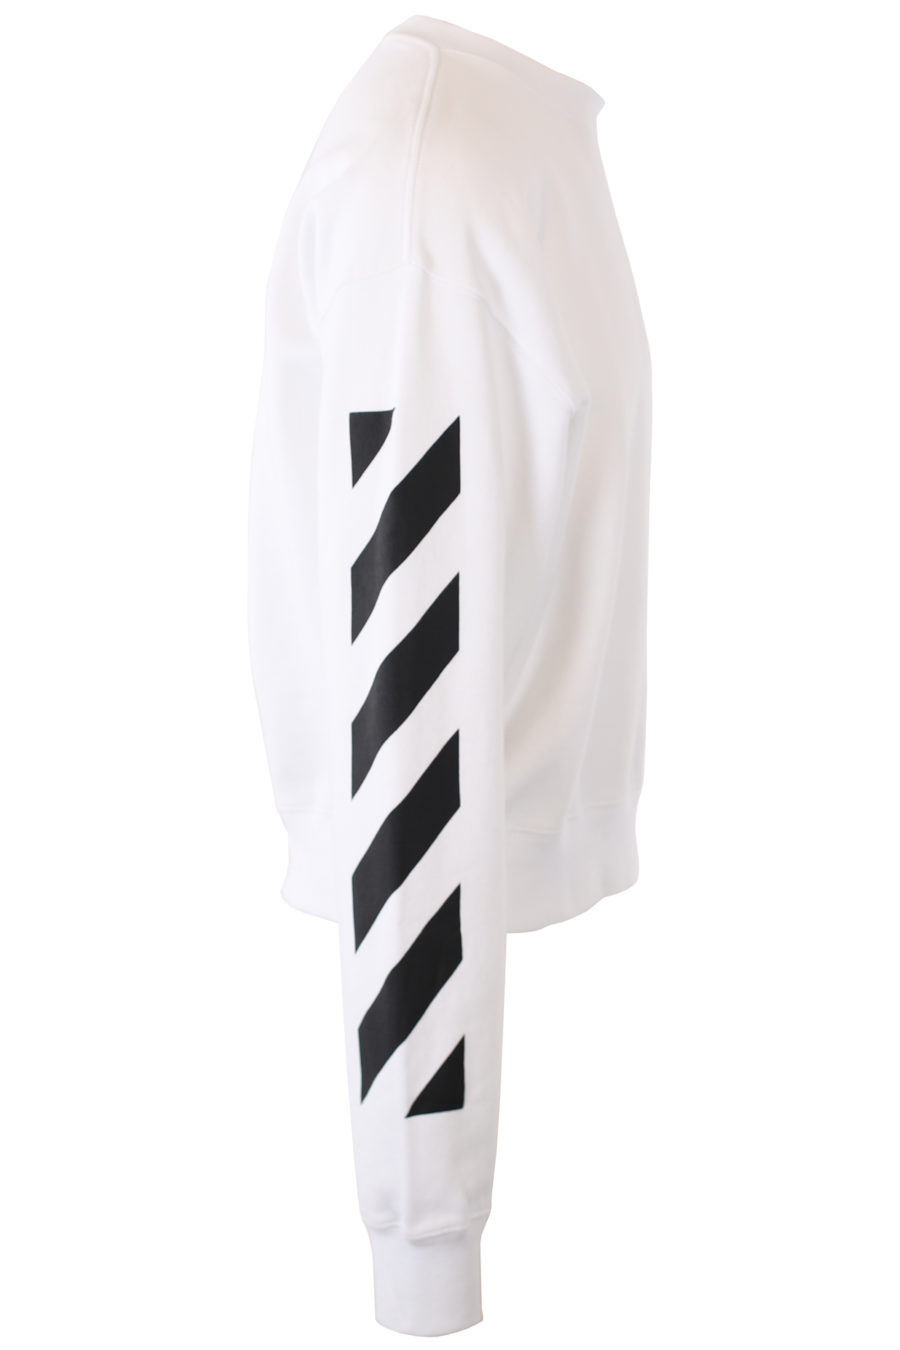 White sweatshirt with logo and diagonal stripes on sleeves - IMG 2364